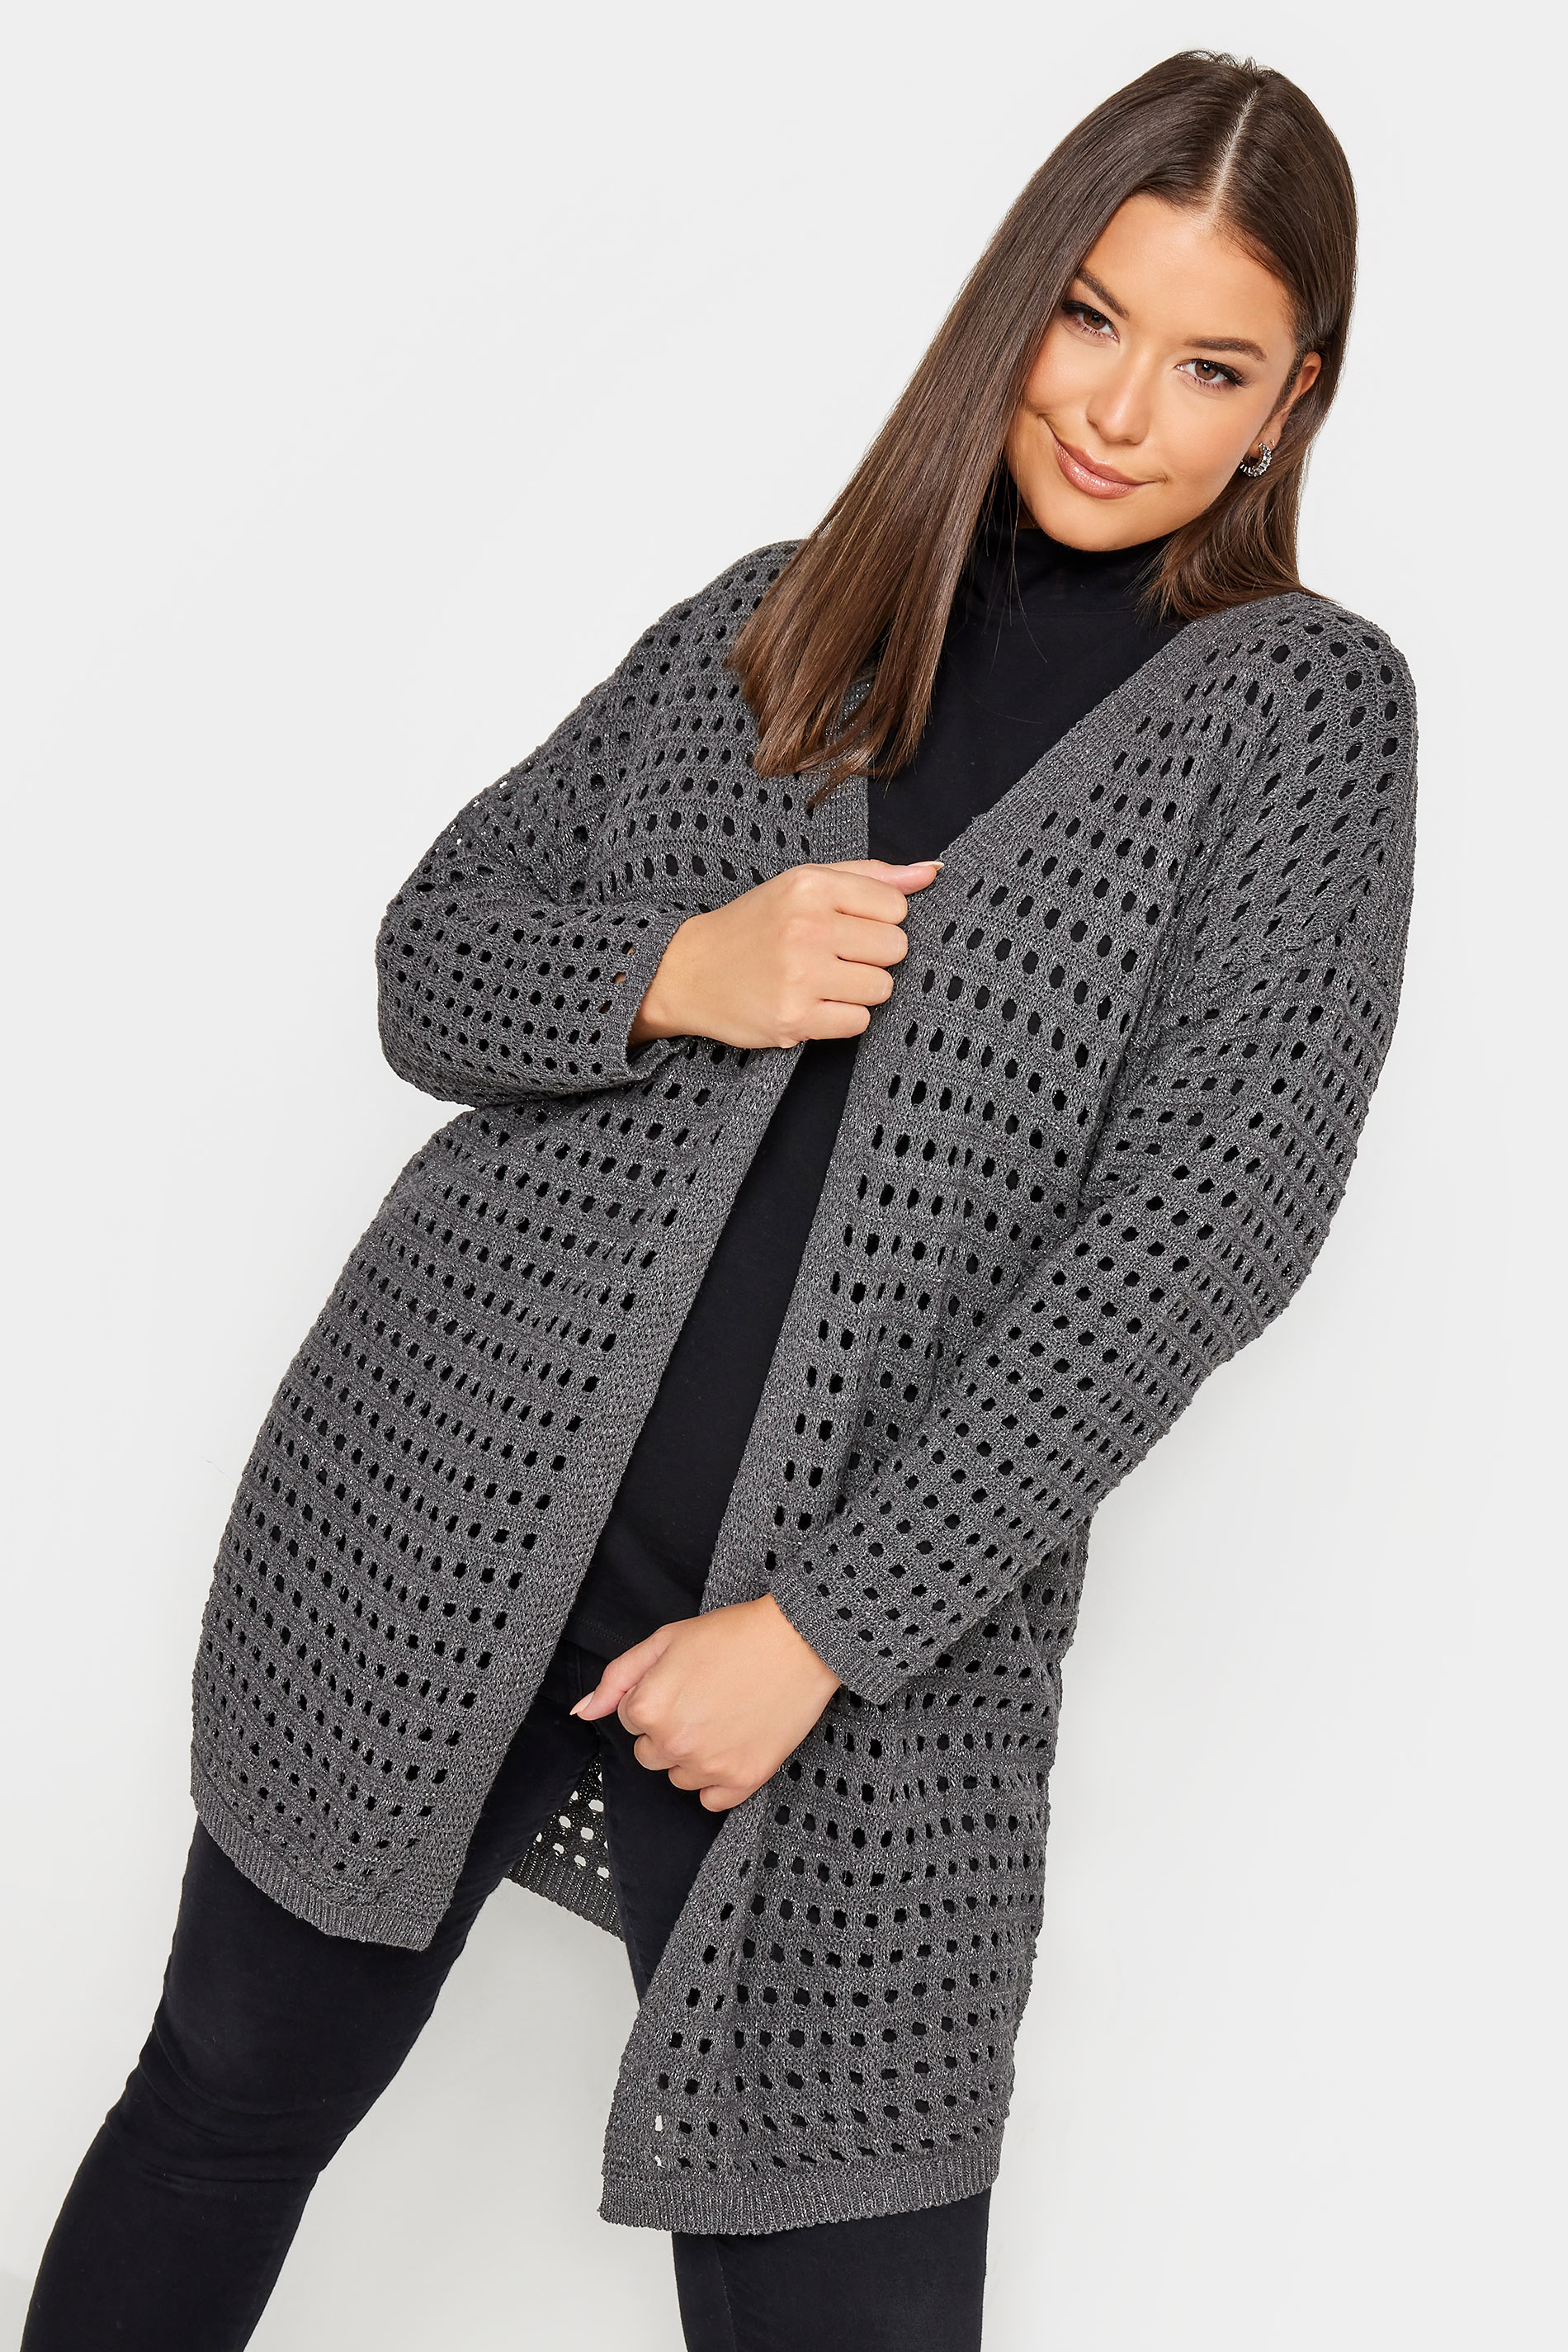 YOURS Plus Size Grey Metallic Crochet Cardigan | Yours Clothing 1